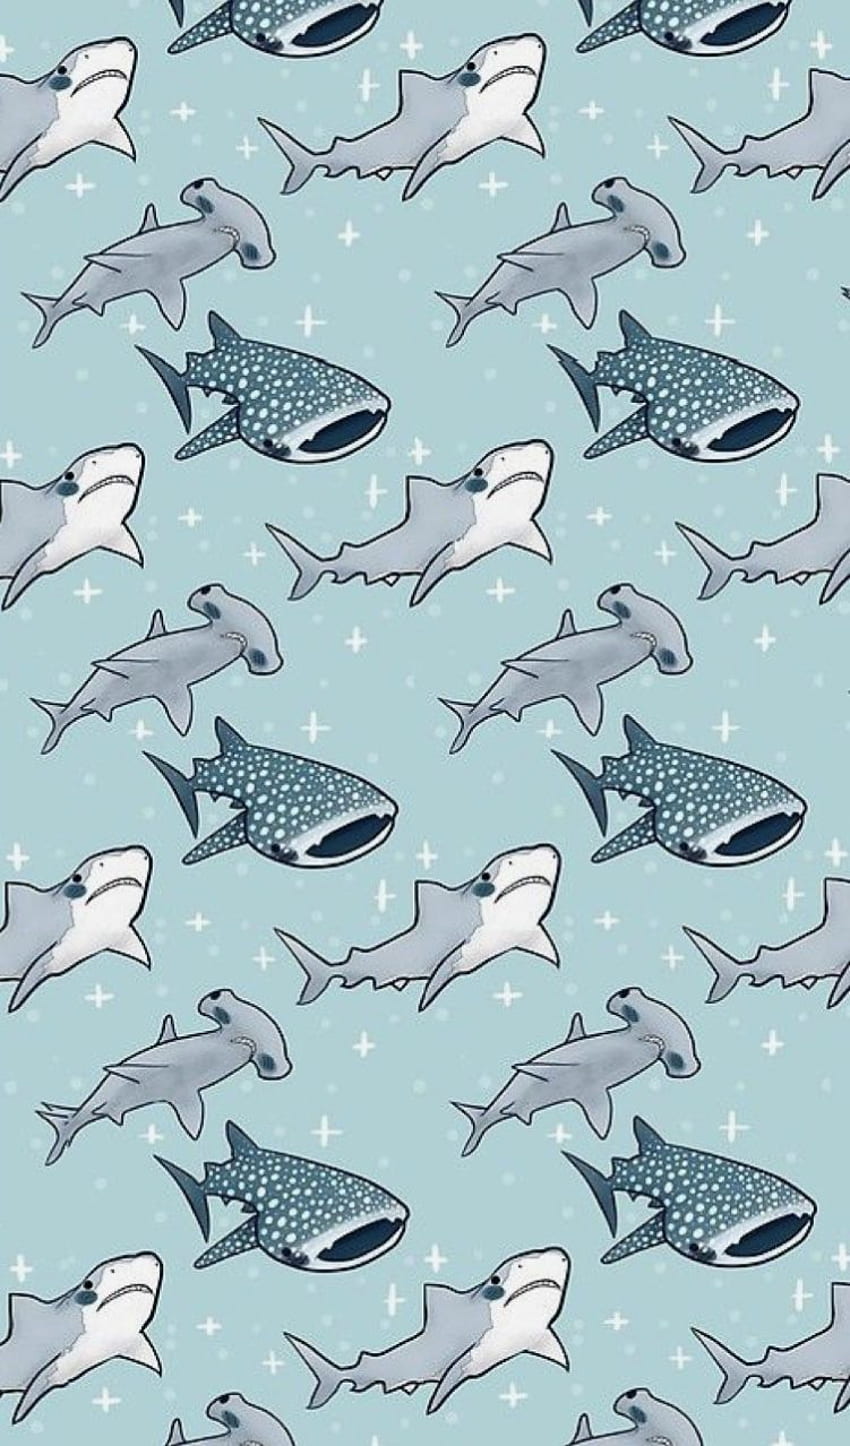 Seamless Shark Pattern Cute Underwater Animal Funny Sea Fish Happy Blue  Wallpaper Design Cartoon Style Vector Stock Vector  Illustration of  fabric print 195358049